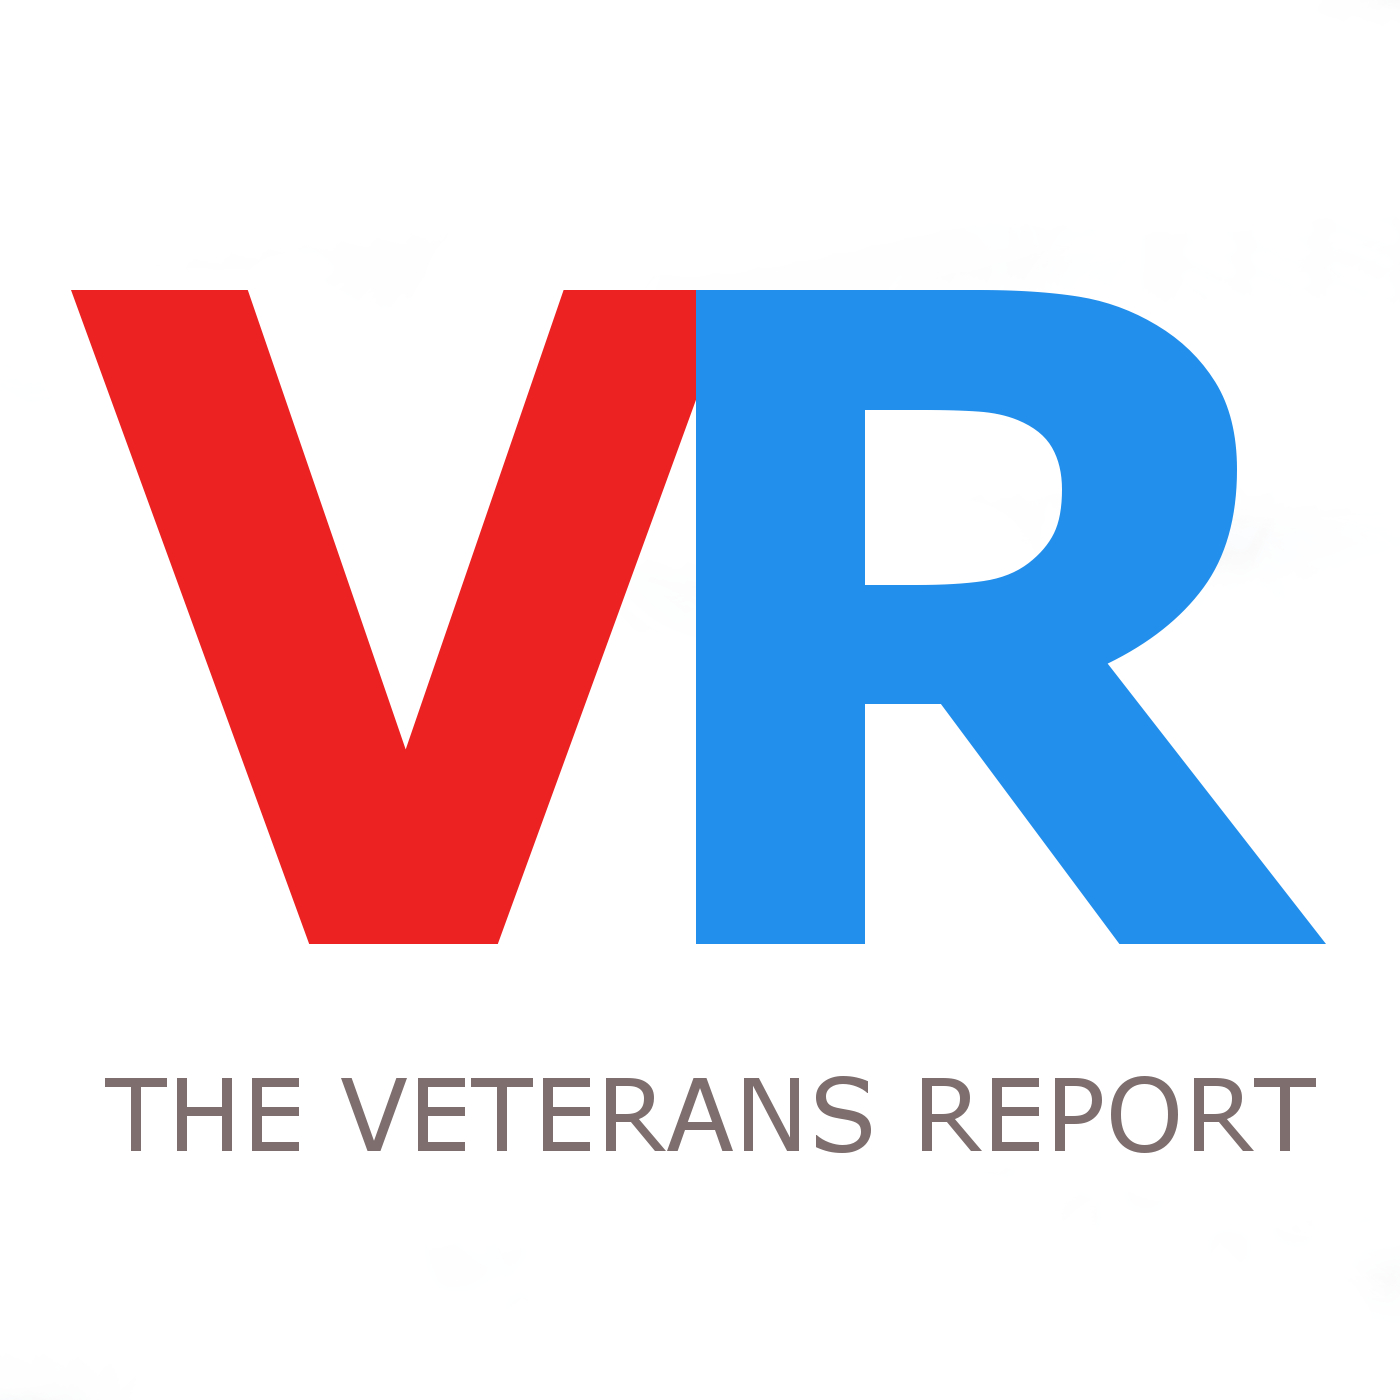 The Veterans Report